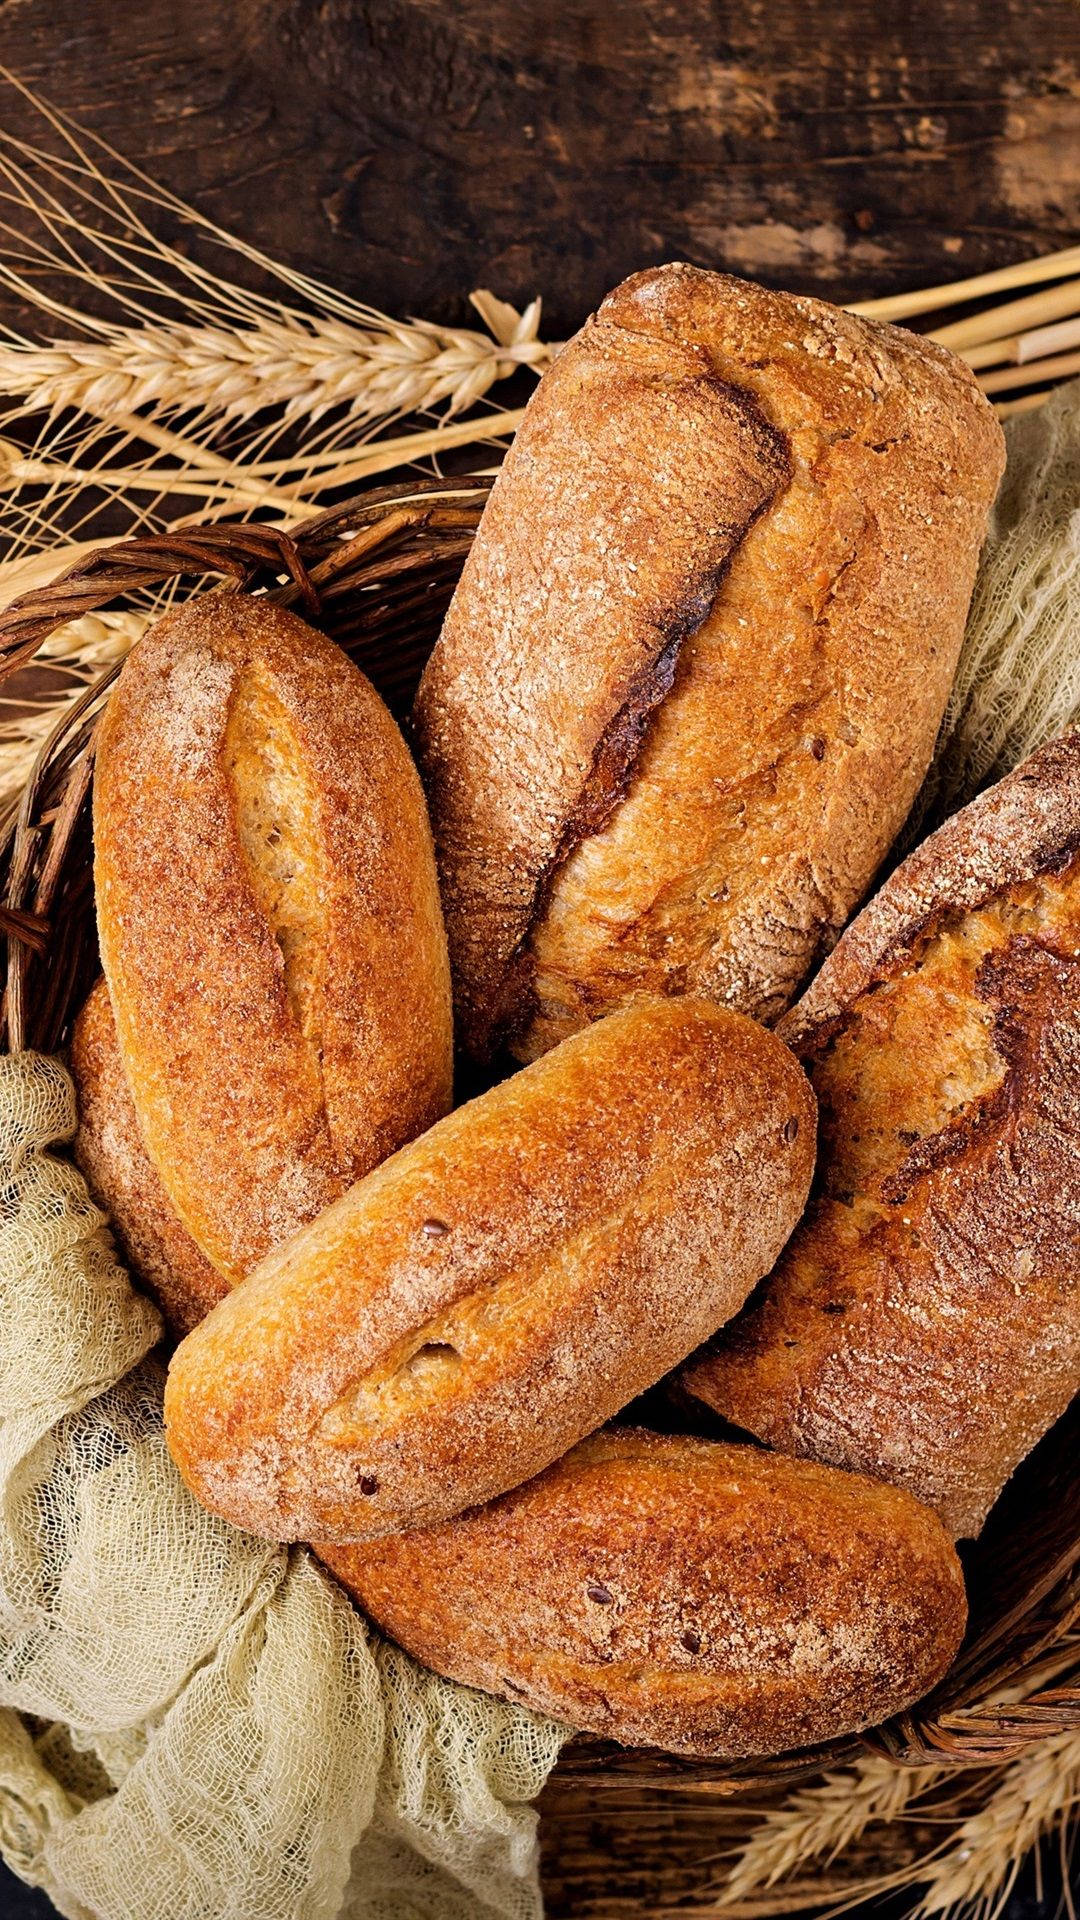 Breads In Basket Background